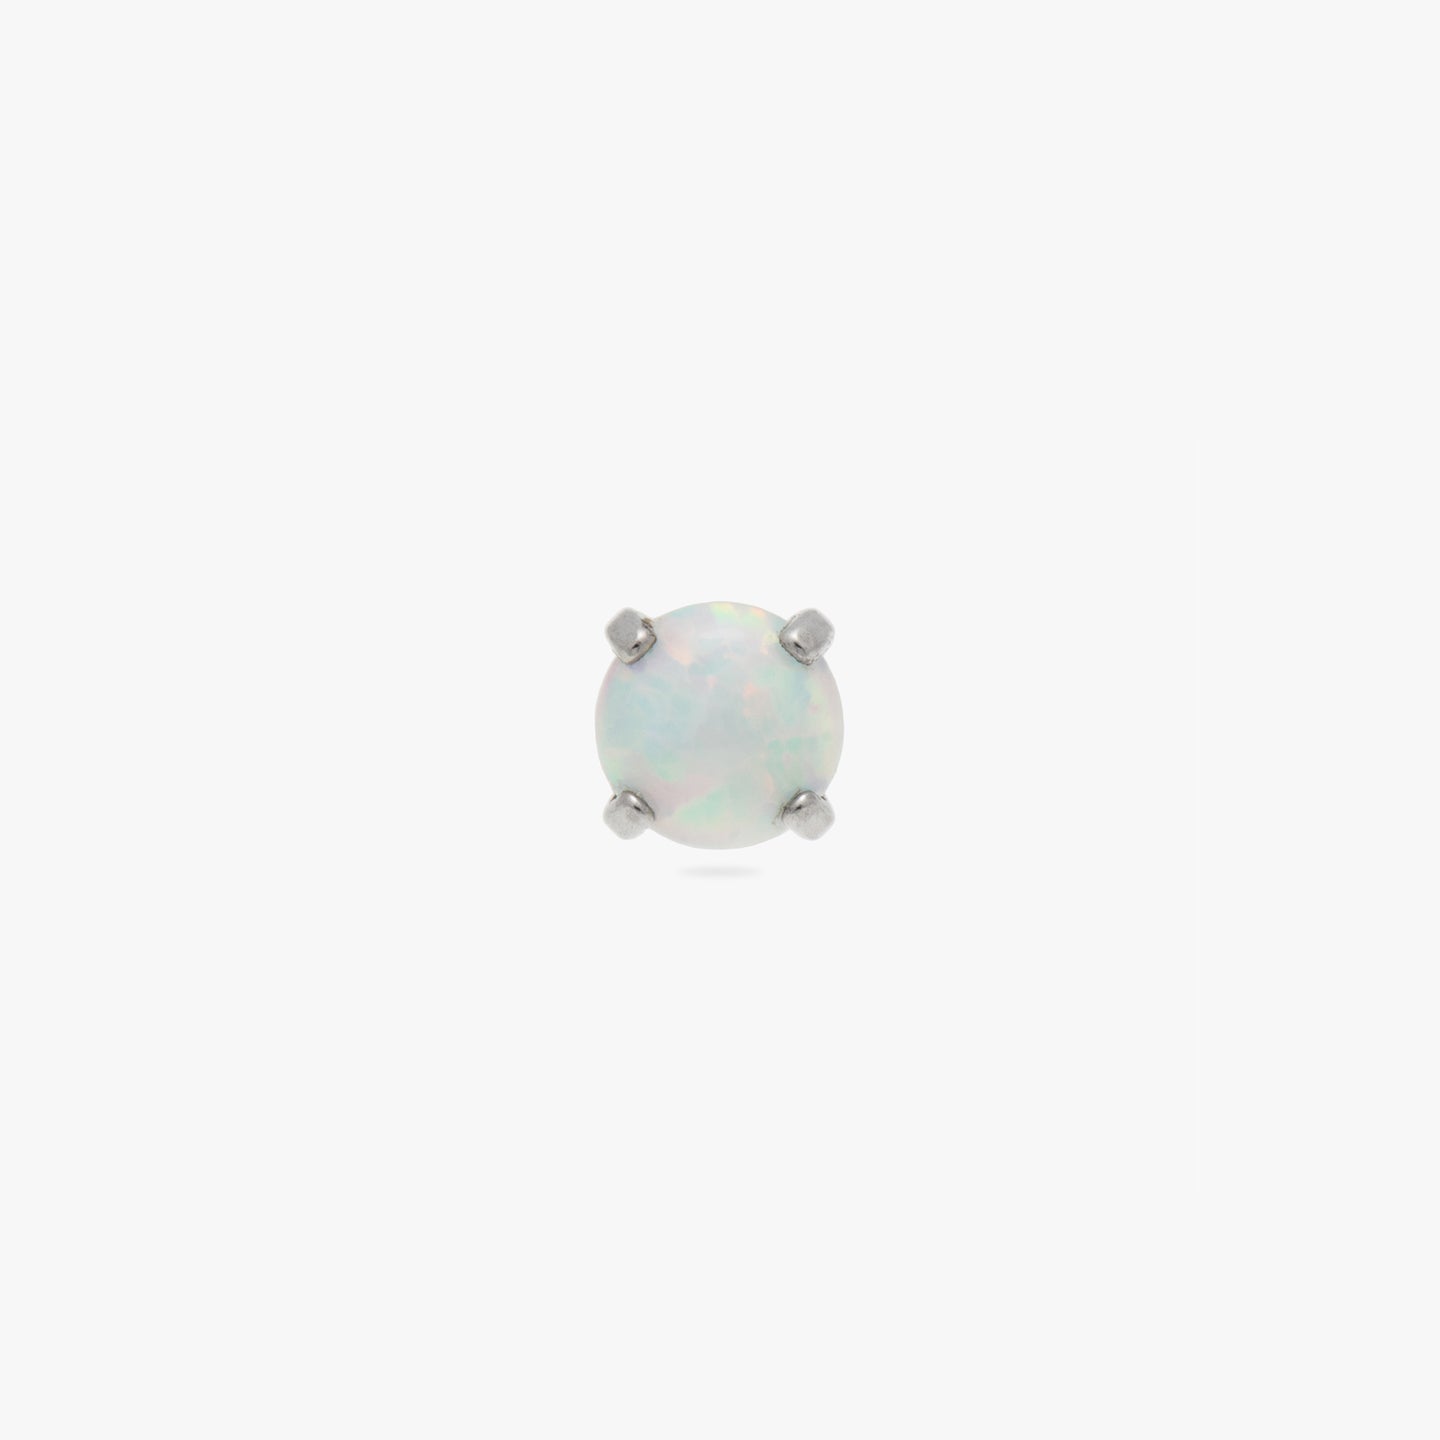 Opal Titanium Piercing Stud